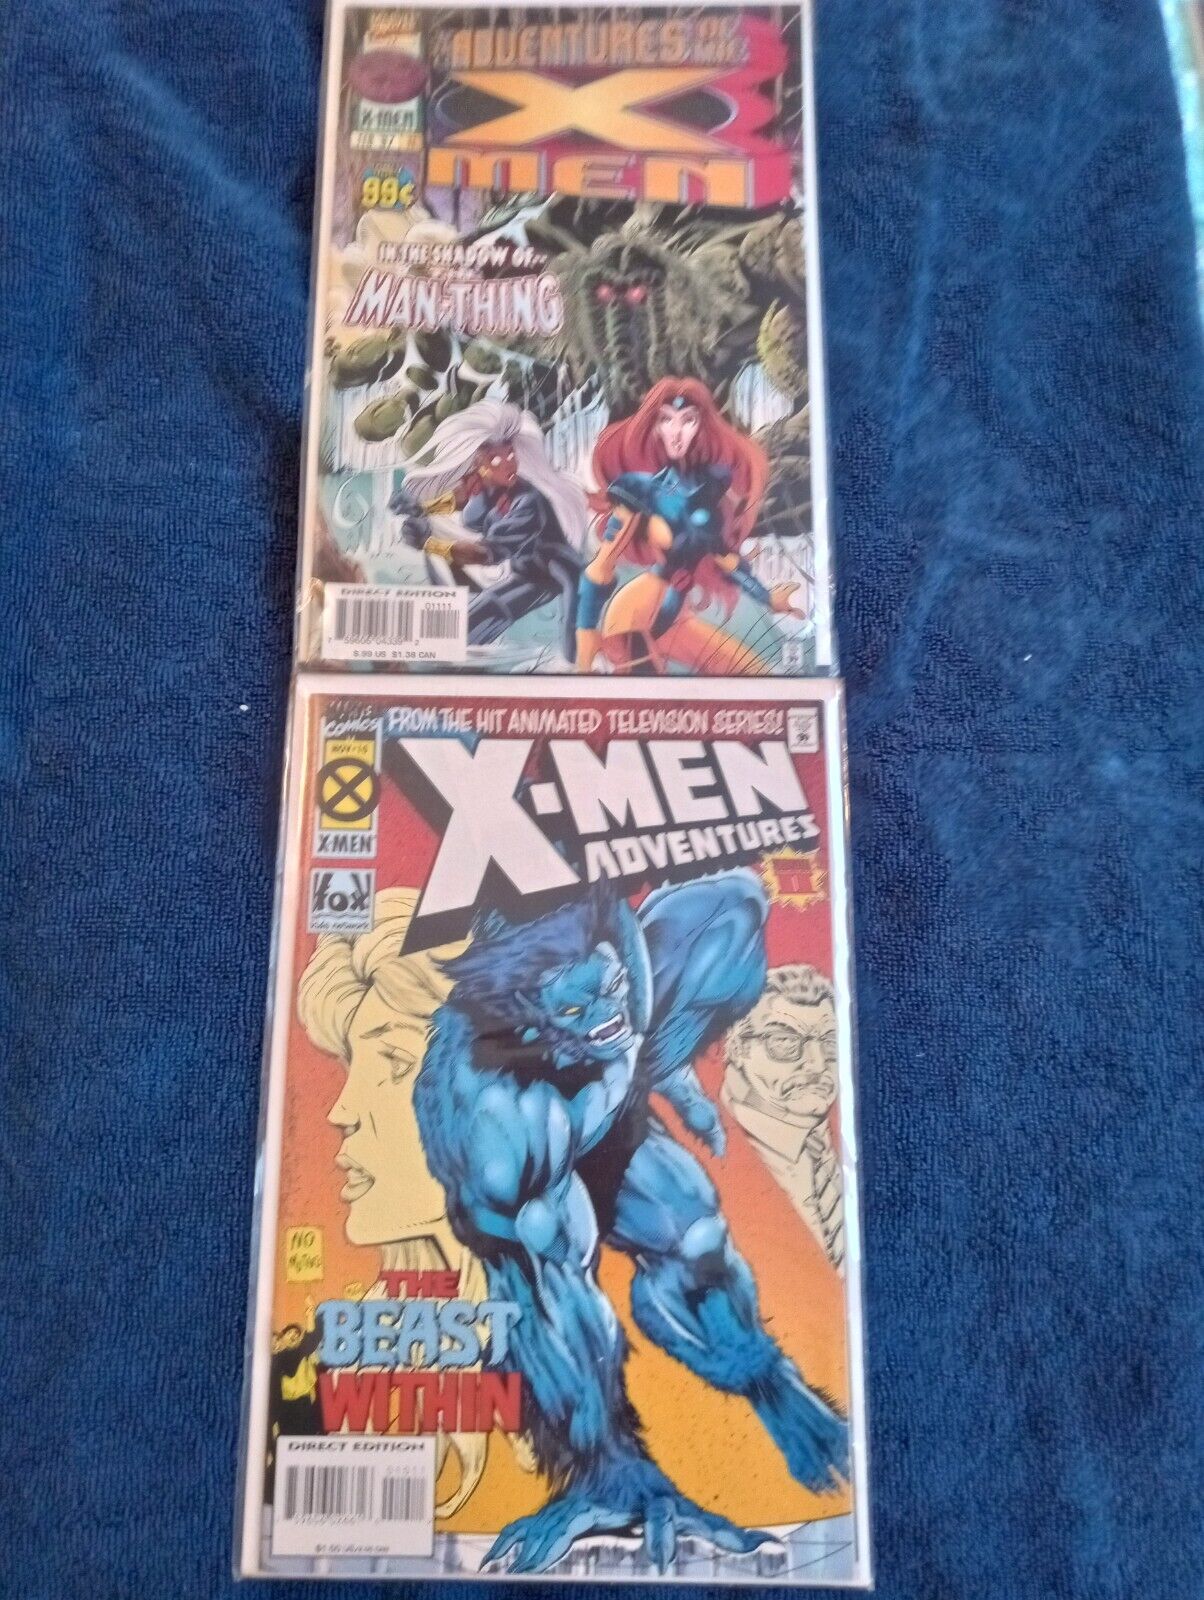 X-MEN ADVENTURES comic books 1997 in very good condition.